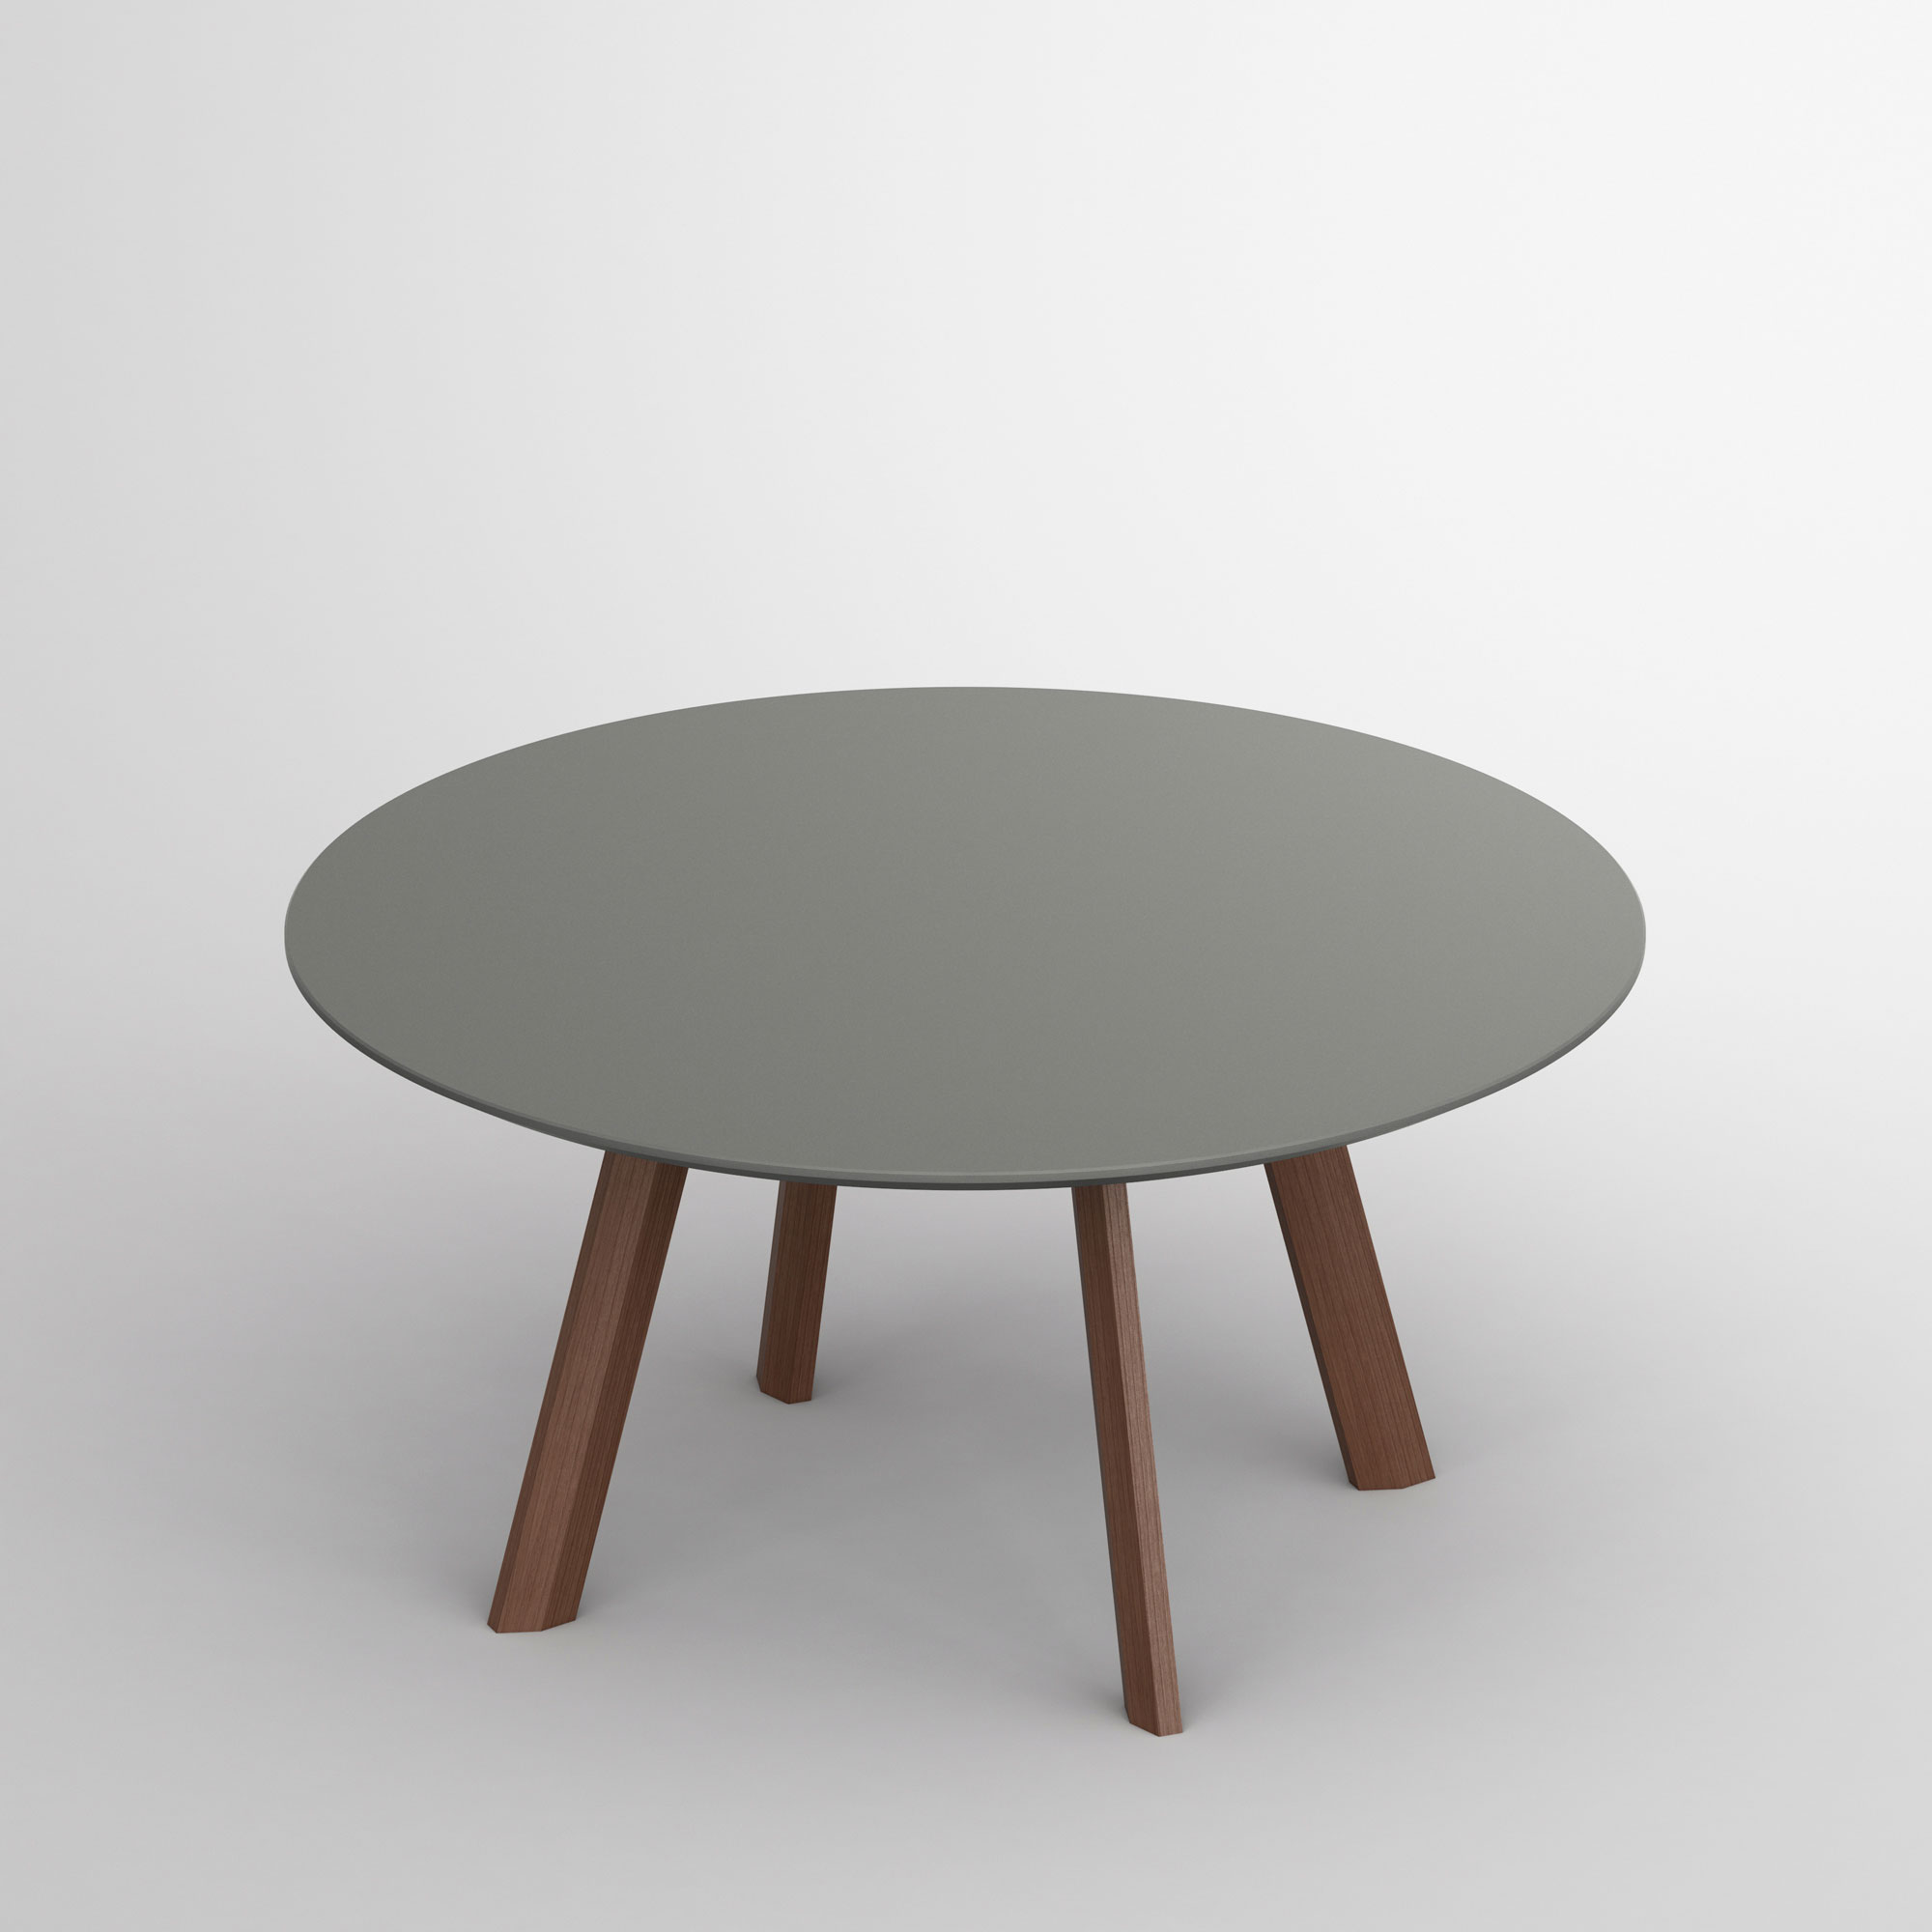 Round Coffee Table Linoleum RHOMBI ROUND LINO cam1 custom made in solid wood by vitamin design